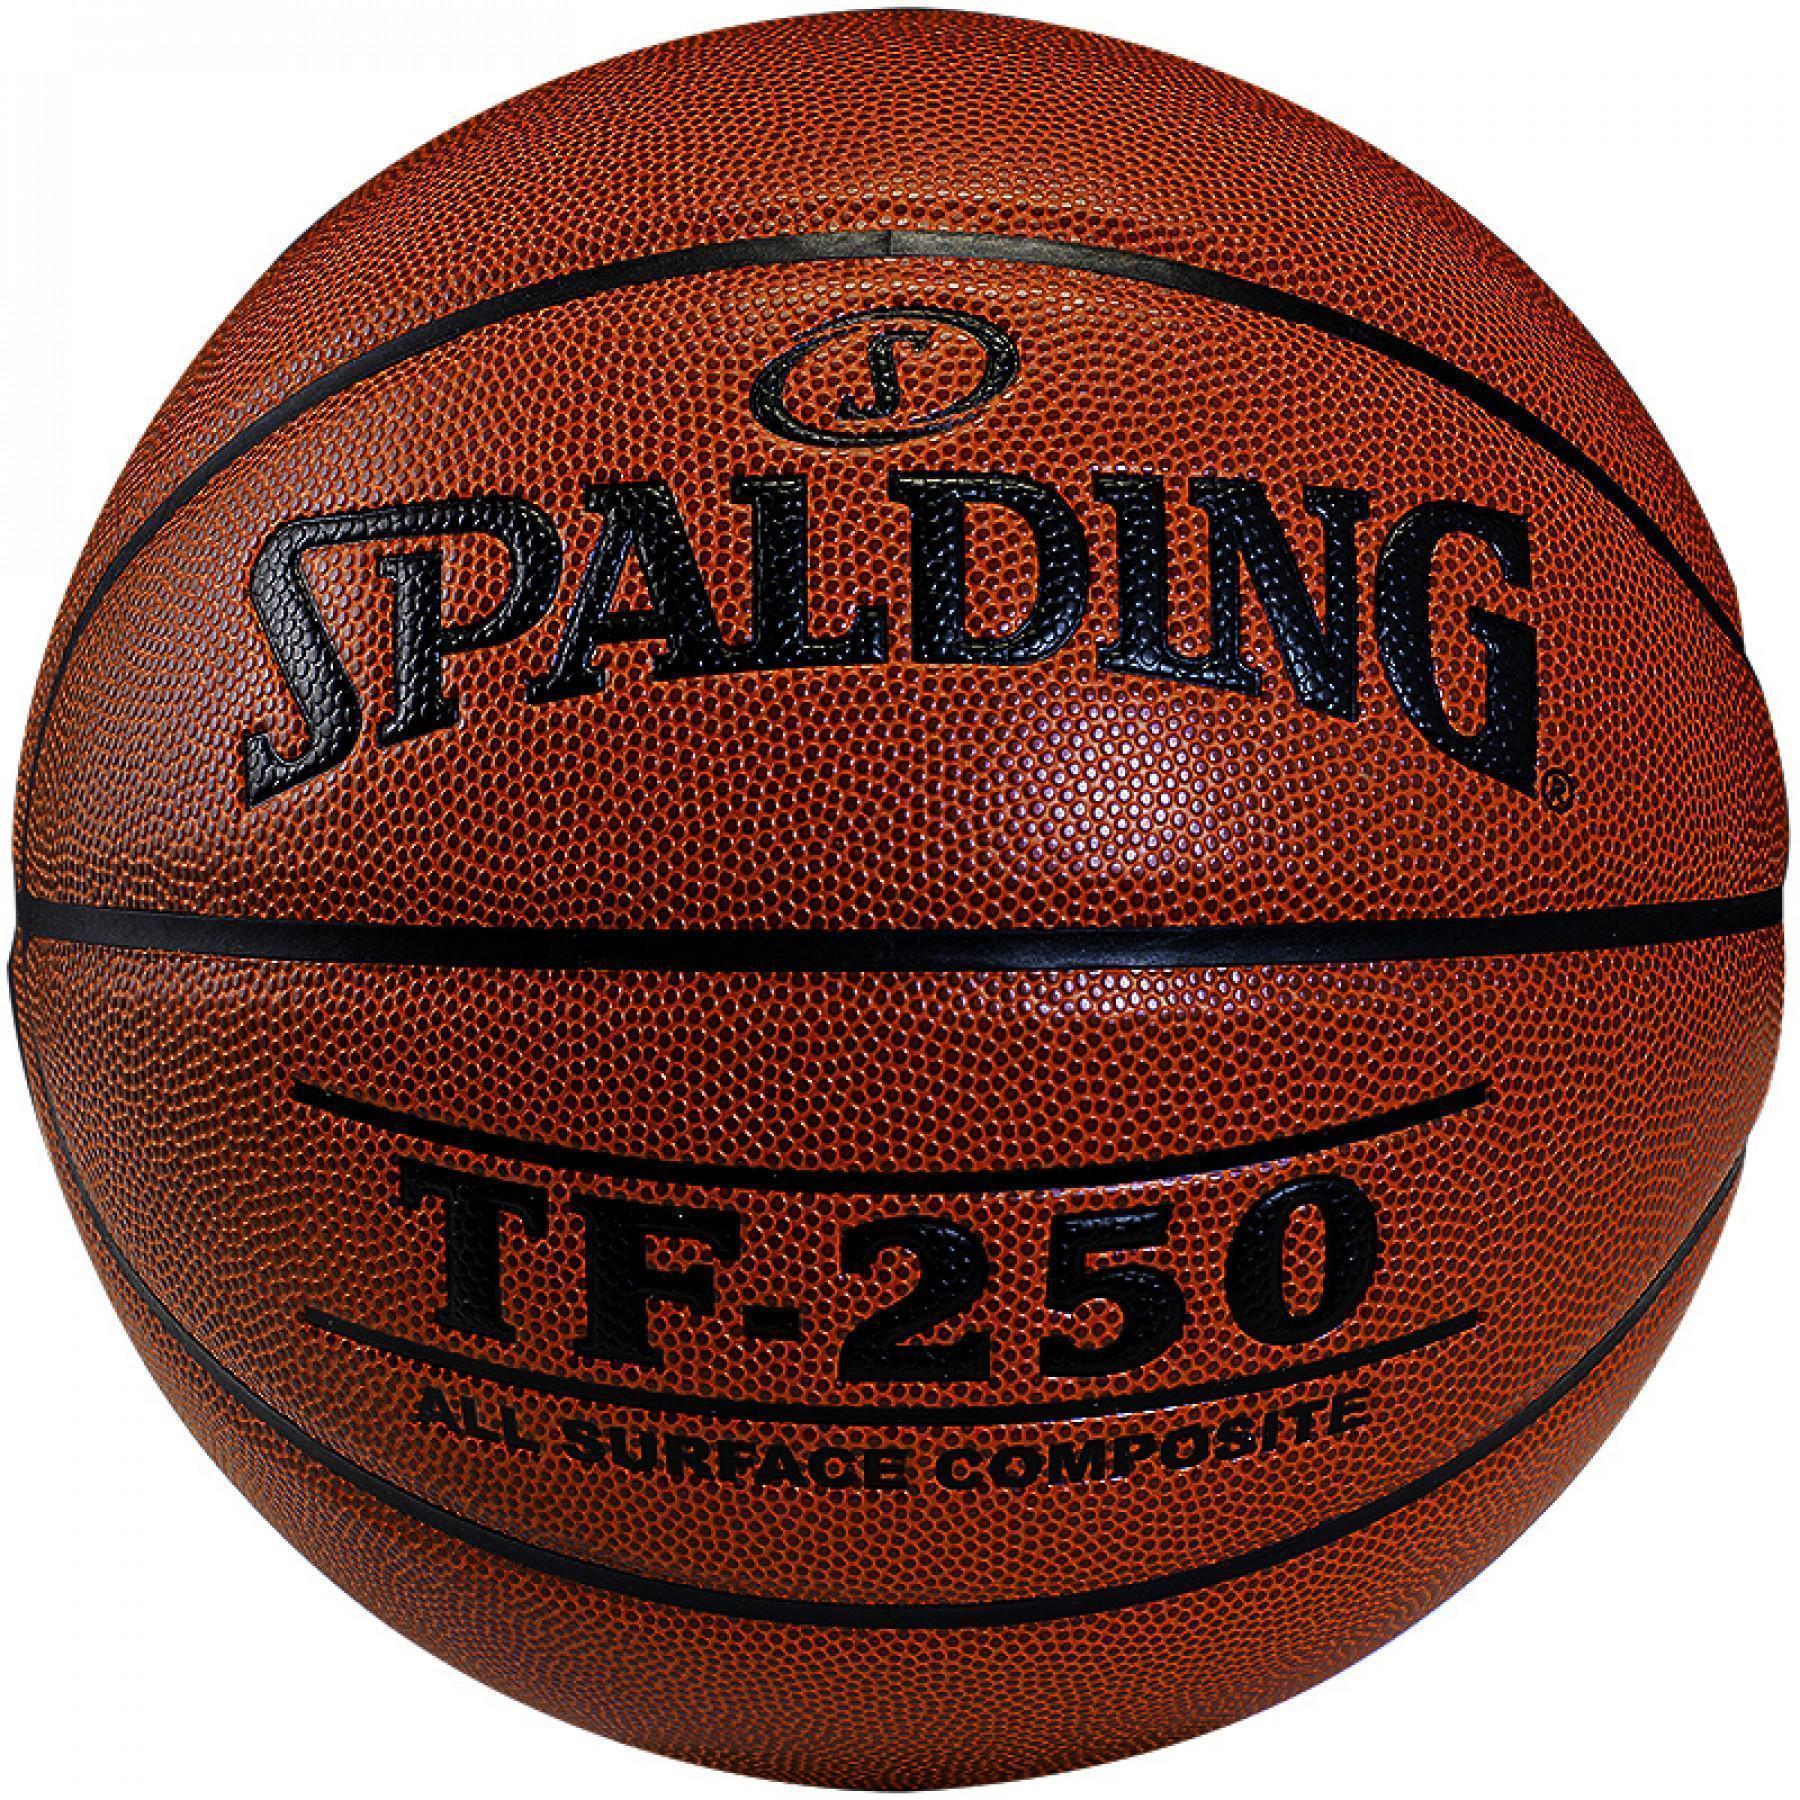 Balão Spalding TF250 indoor/outdoor